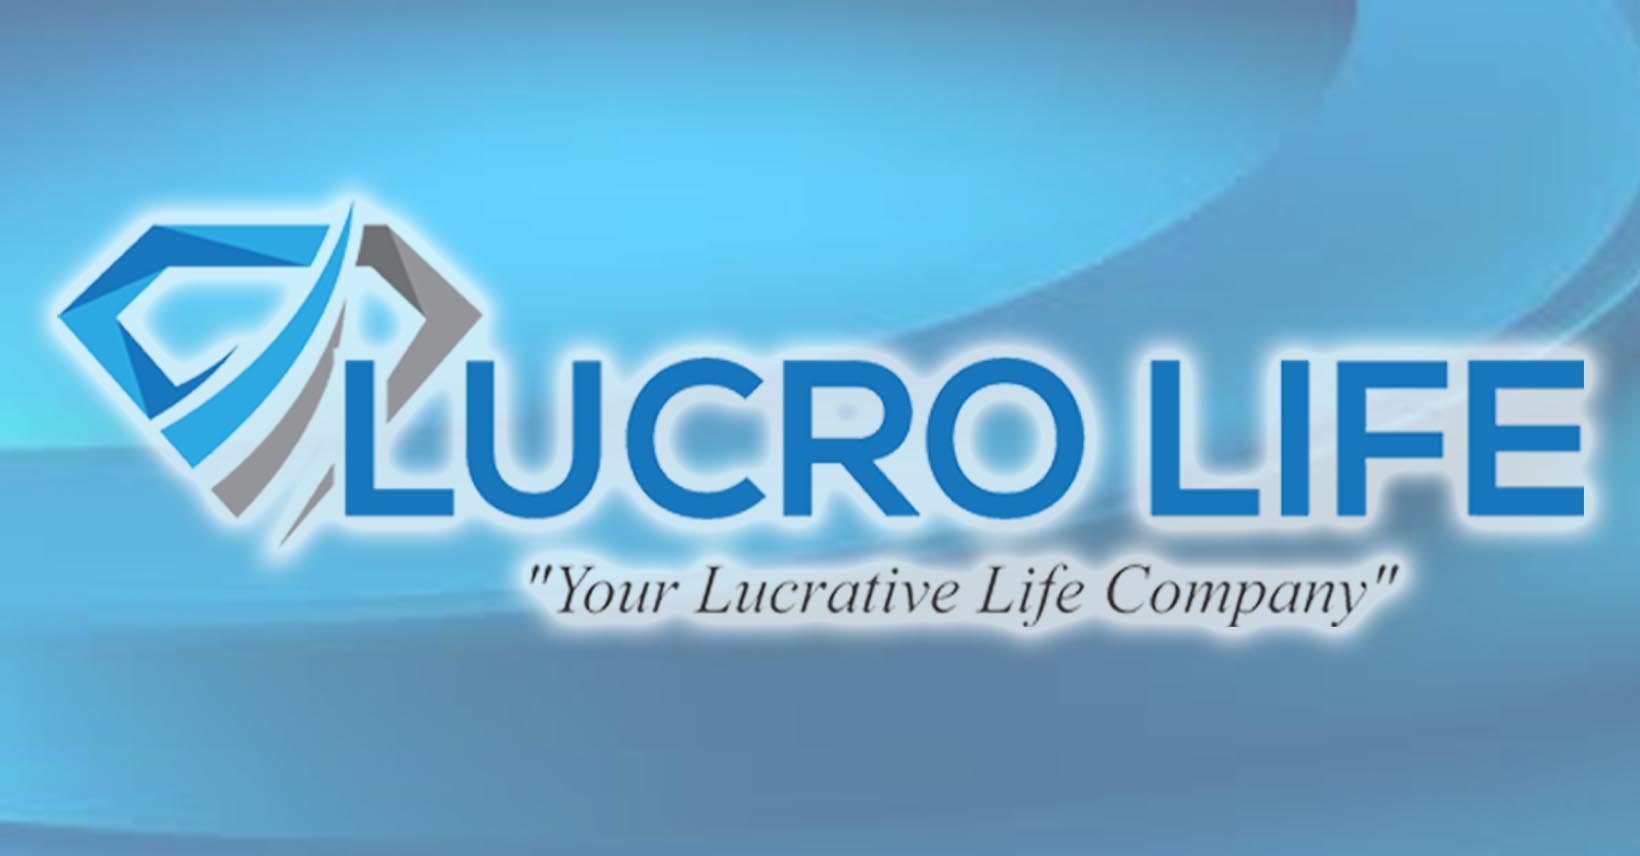 Welcome to Lucro Life University